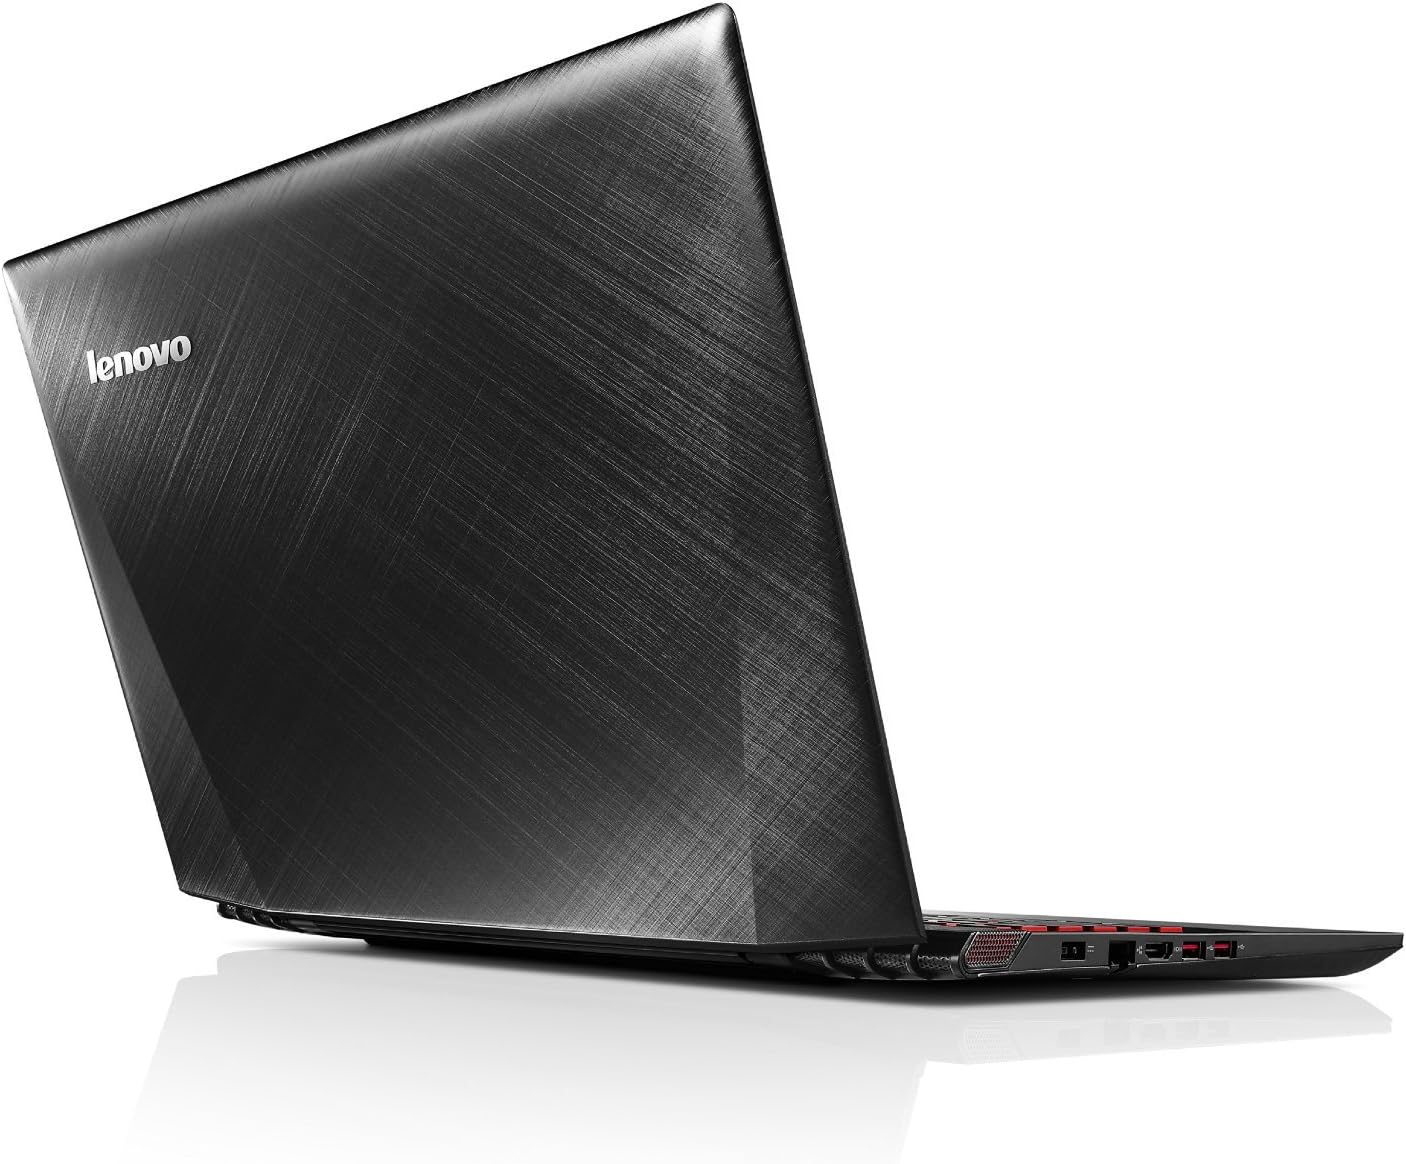 “Experience Brilliance: Lenovo Y50 Unveils Stunning 4K Display”